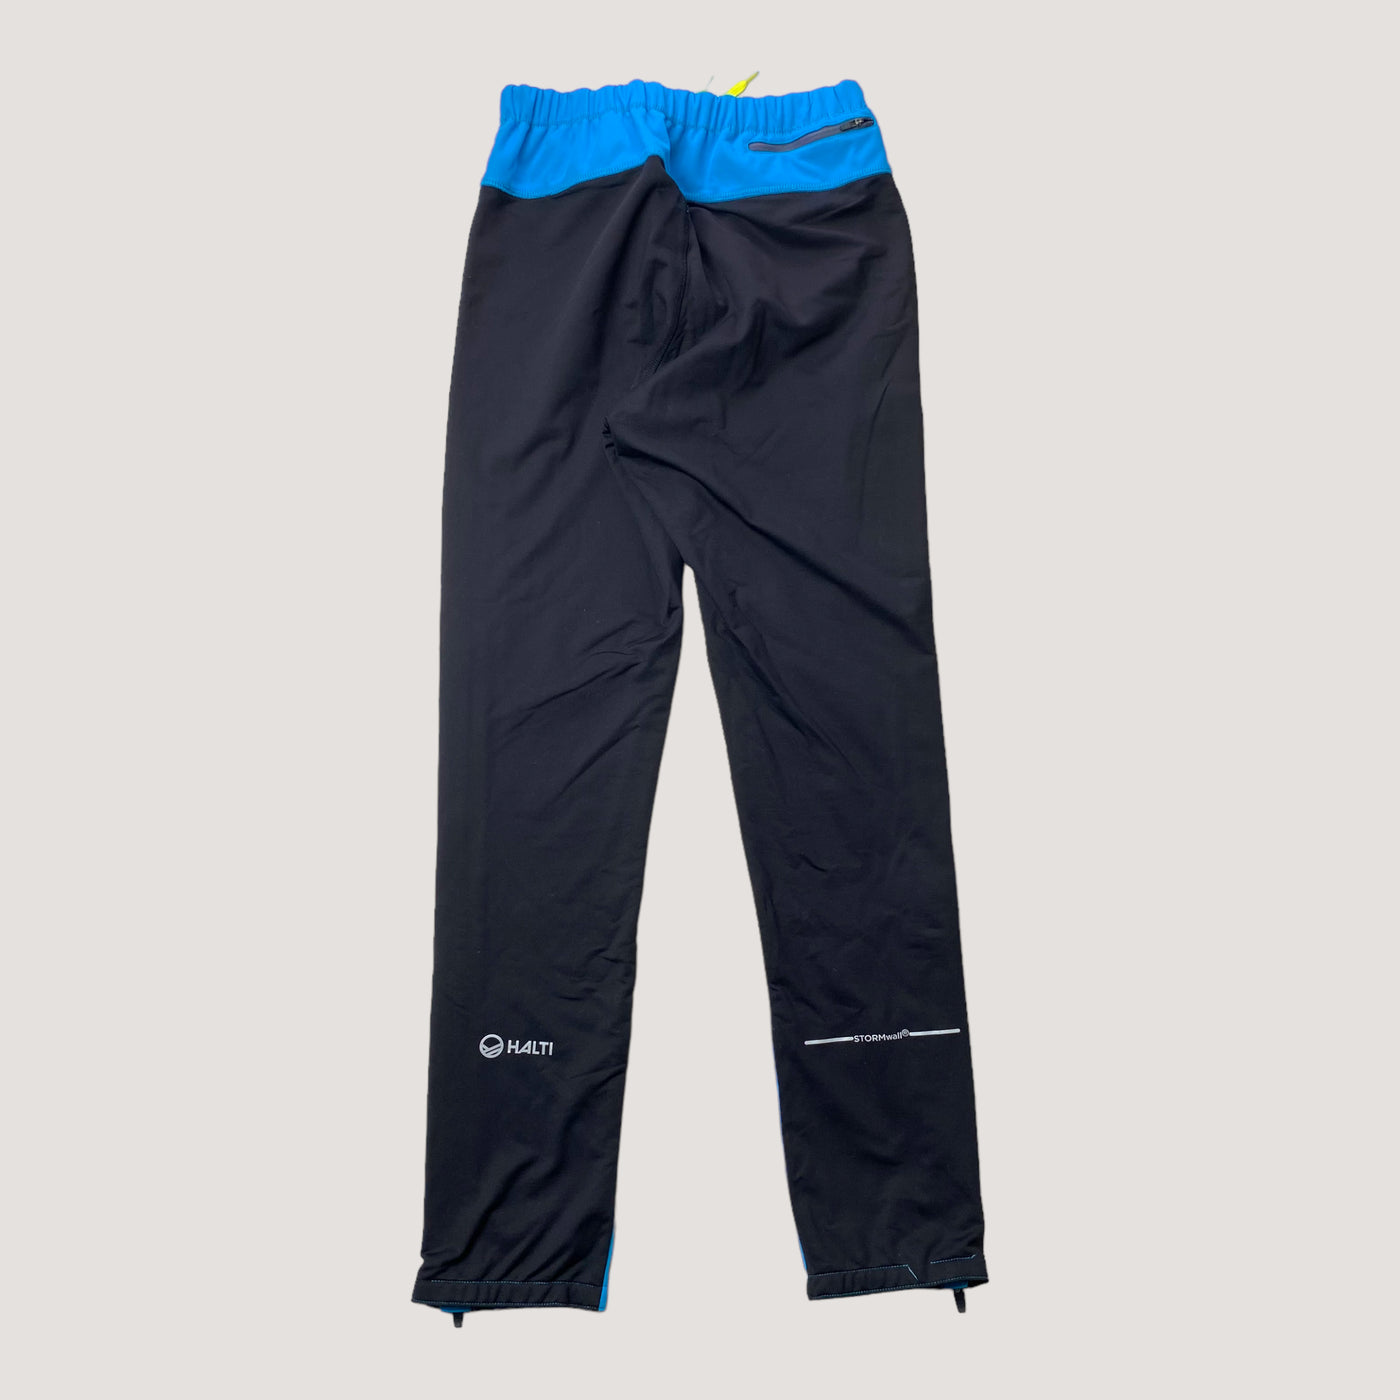 Halti softshell outdoor pants, deep sky blue/black | man S